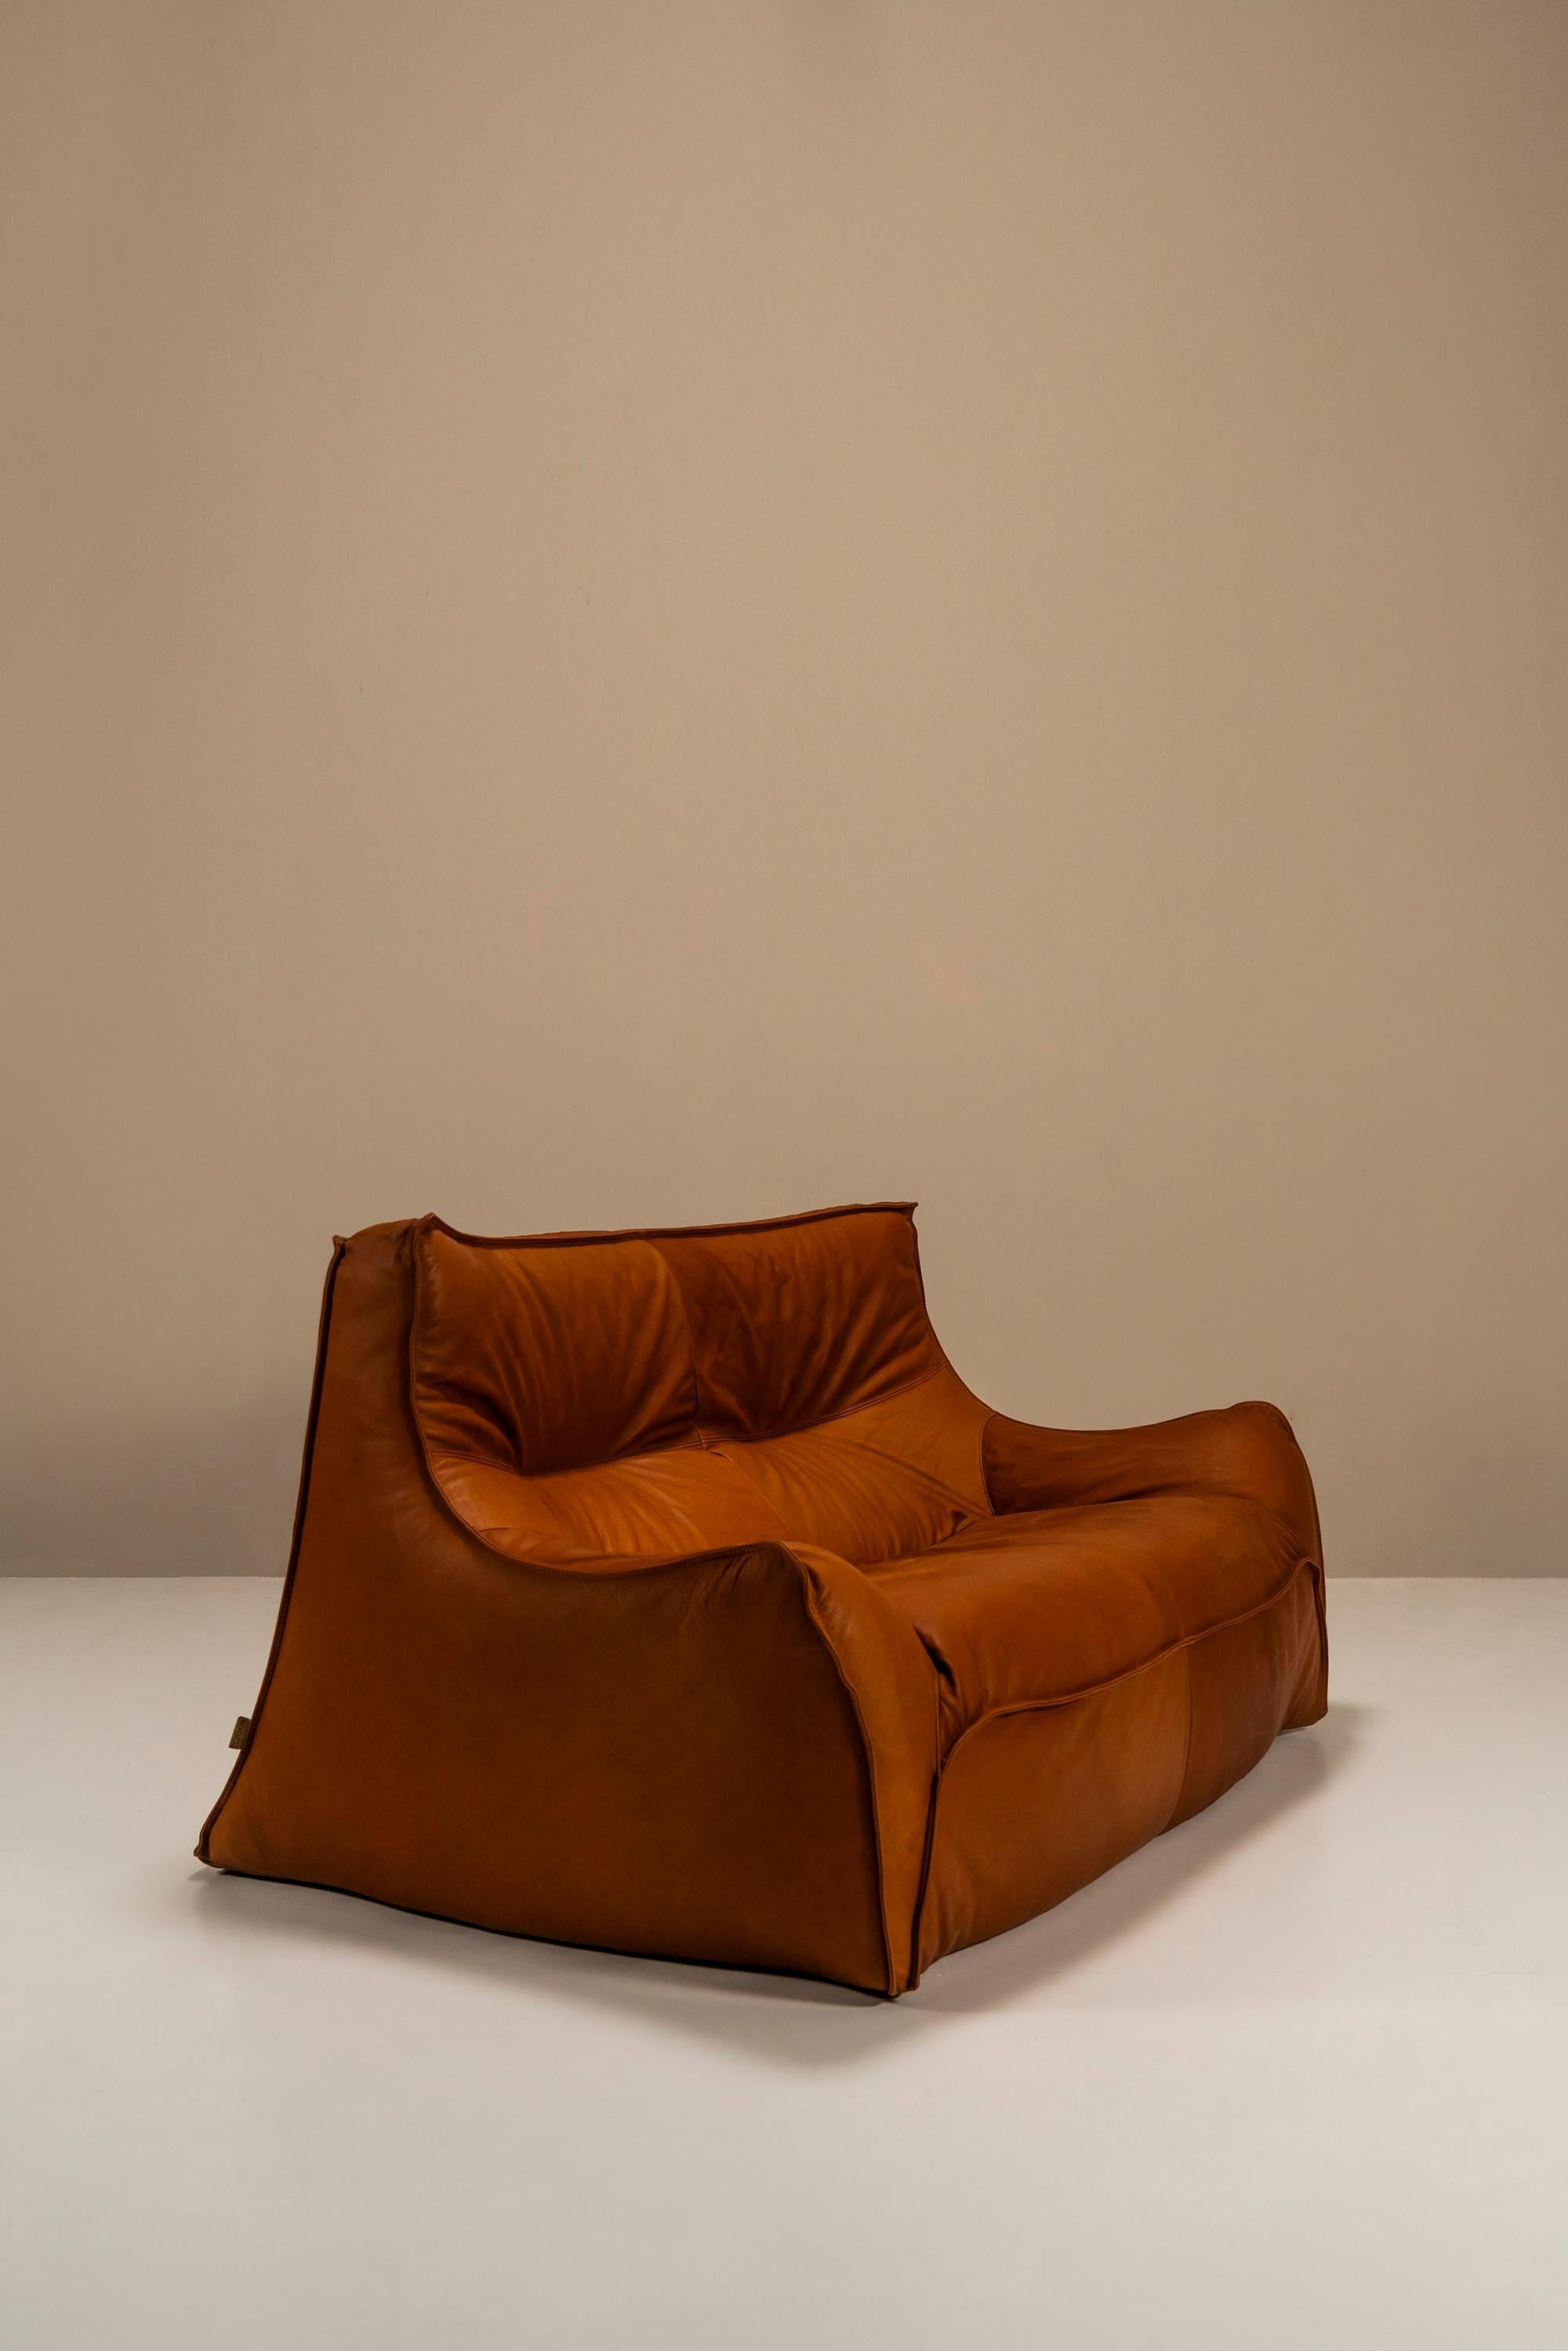 Leather Two-Seater Sofa Model “Satan” By Bernard Govin For Ligne Roset, France 1970s For Sale